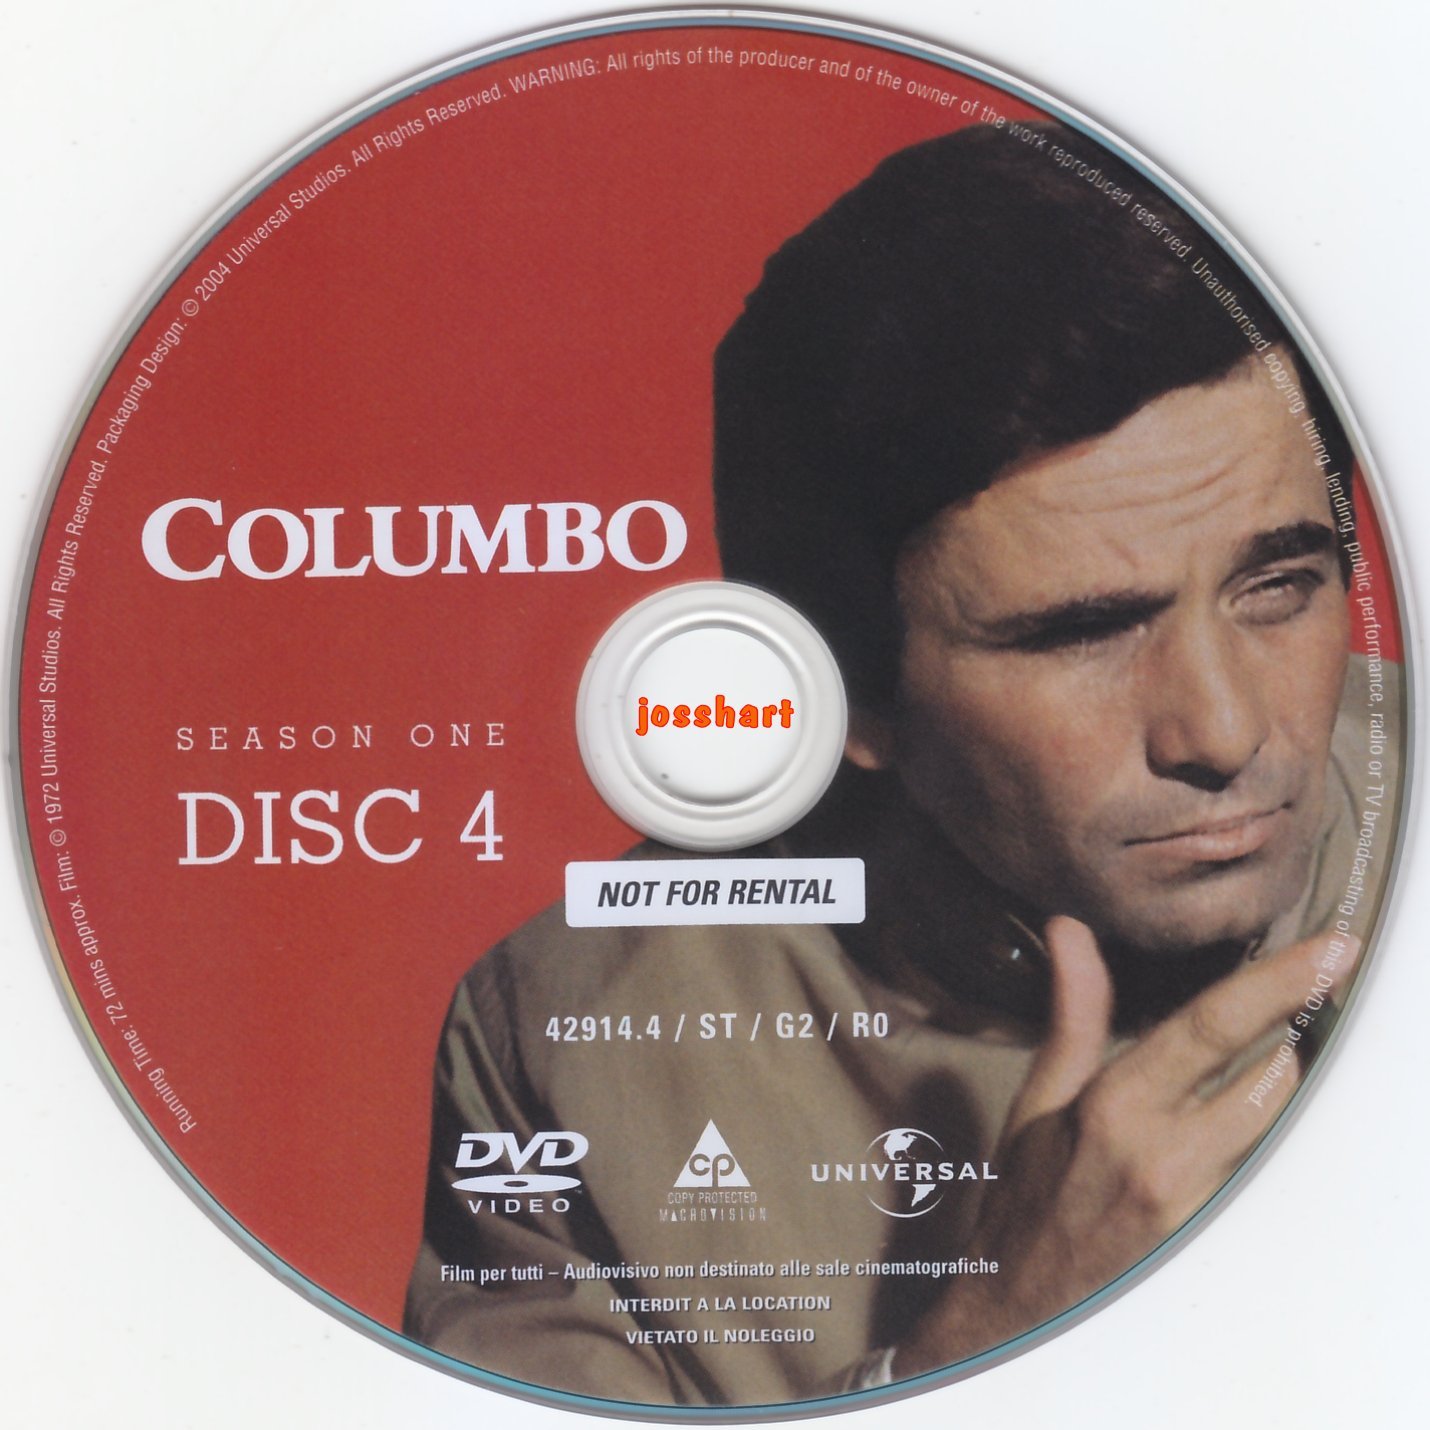 Columbo S1 DISC4